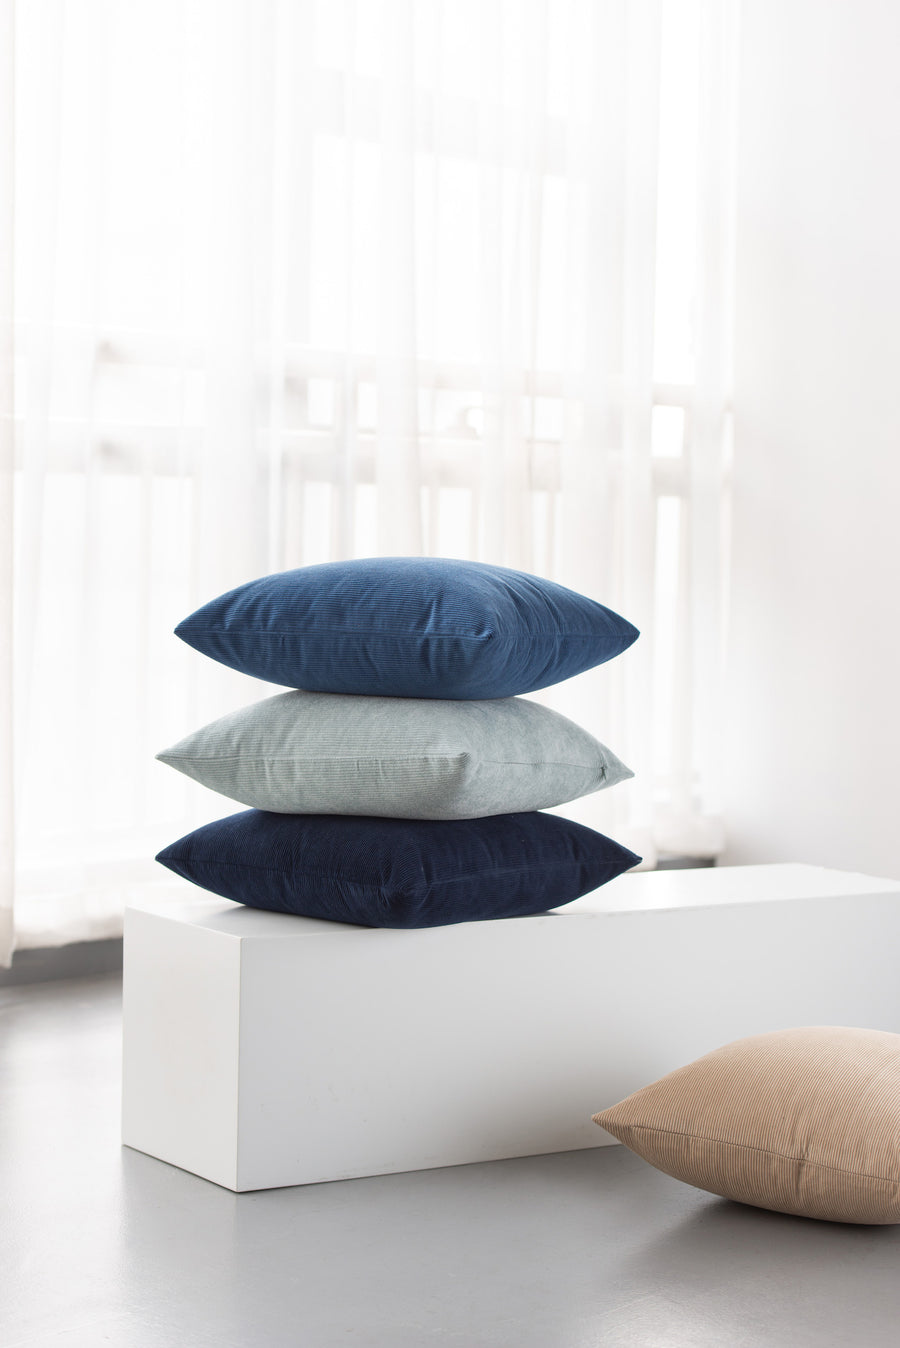 Modern Pillow Cover, Corduroy, Navy Blue, 18